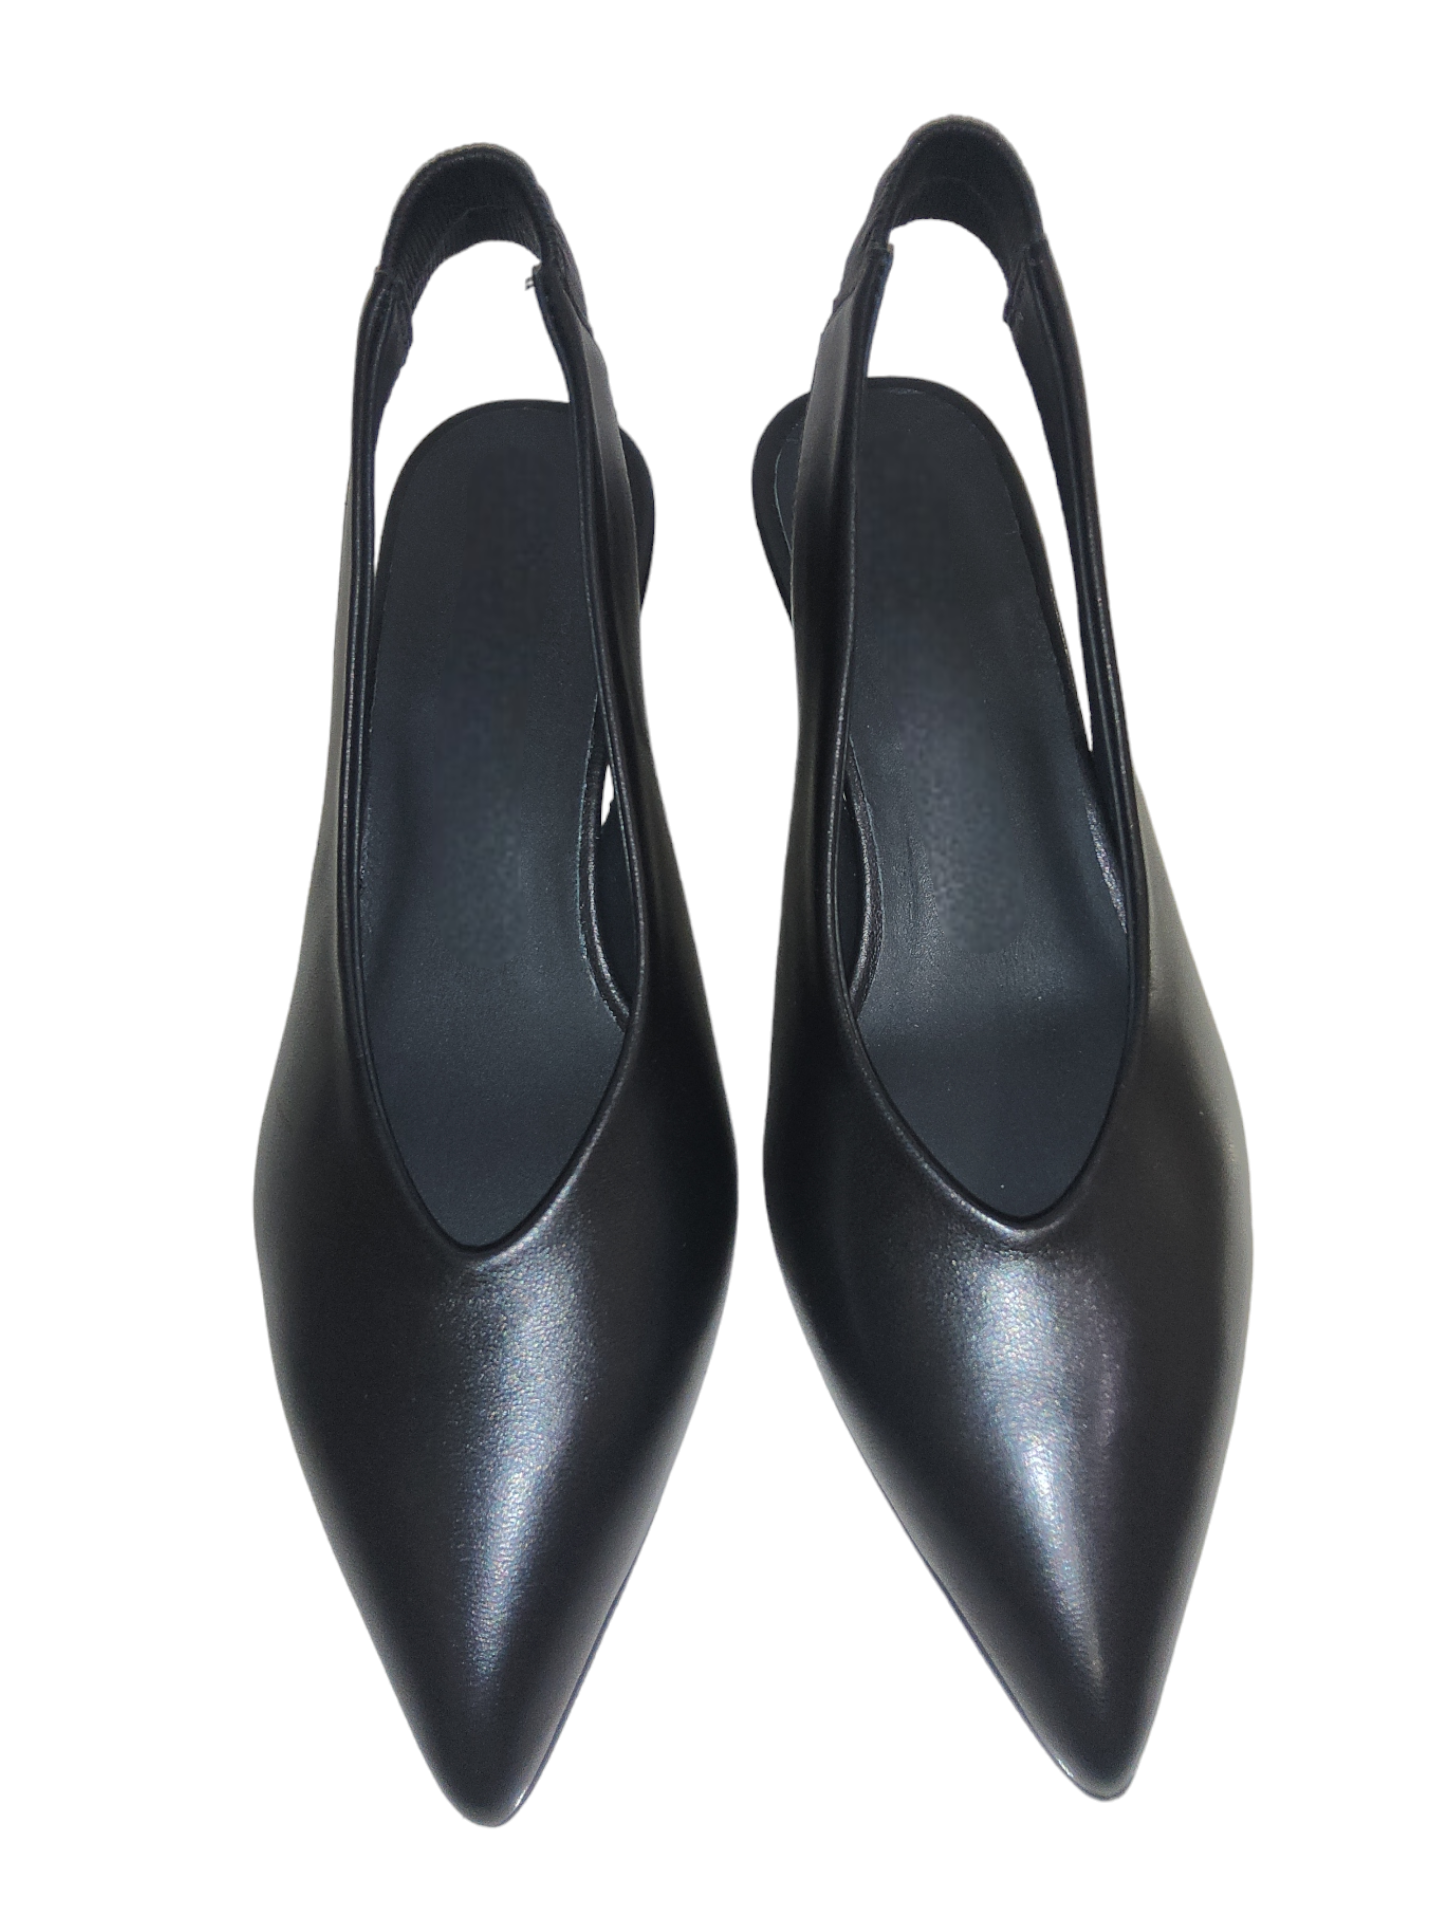 Black leather slingback shoe